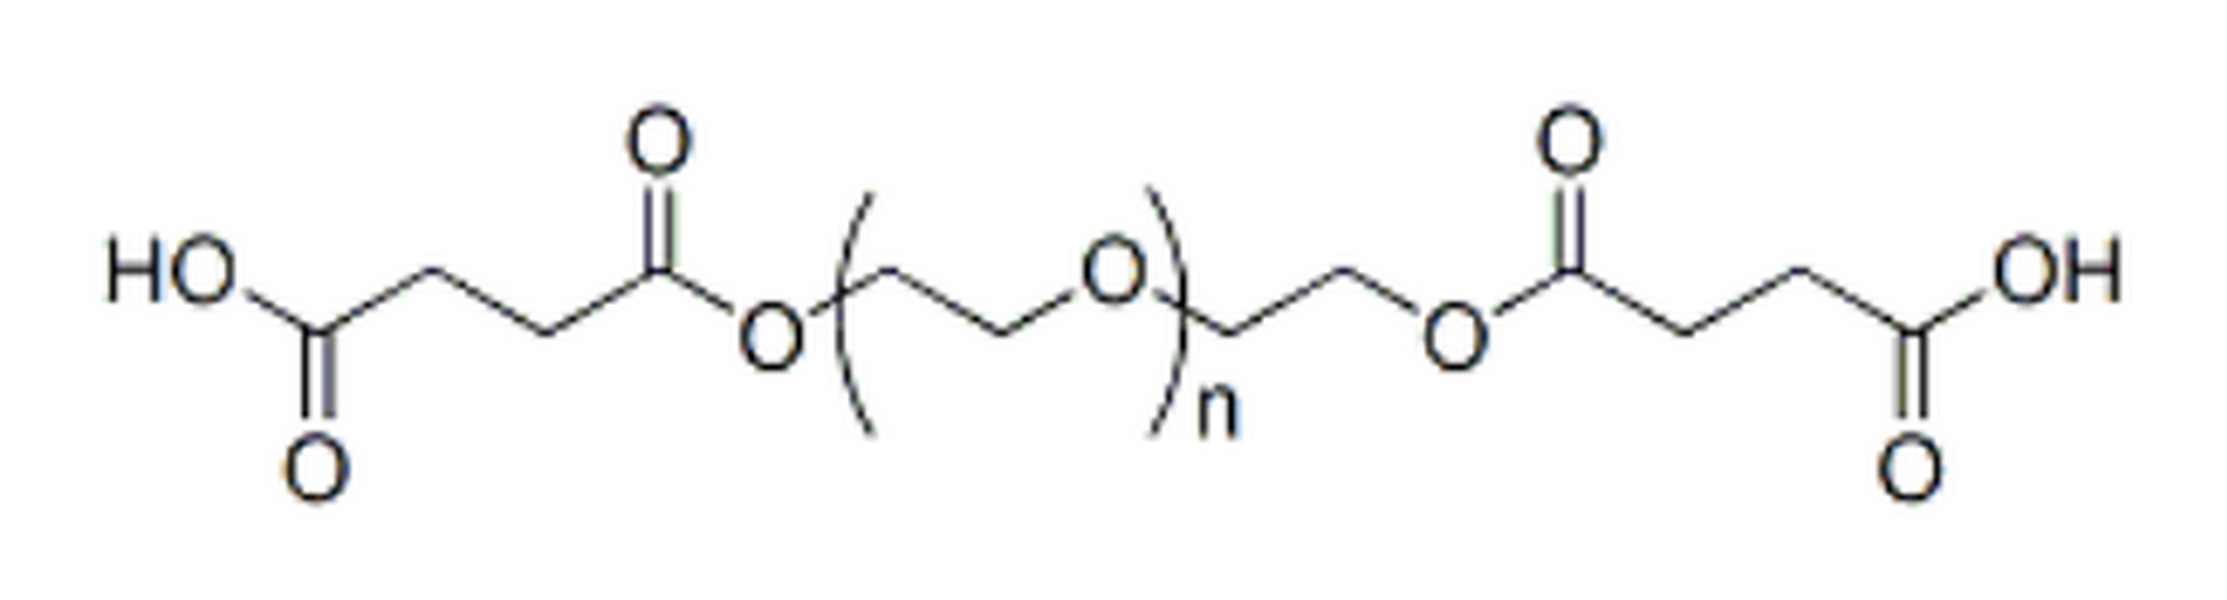 PEG-bis-Succinic Acid, MW 2K